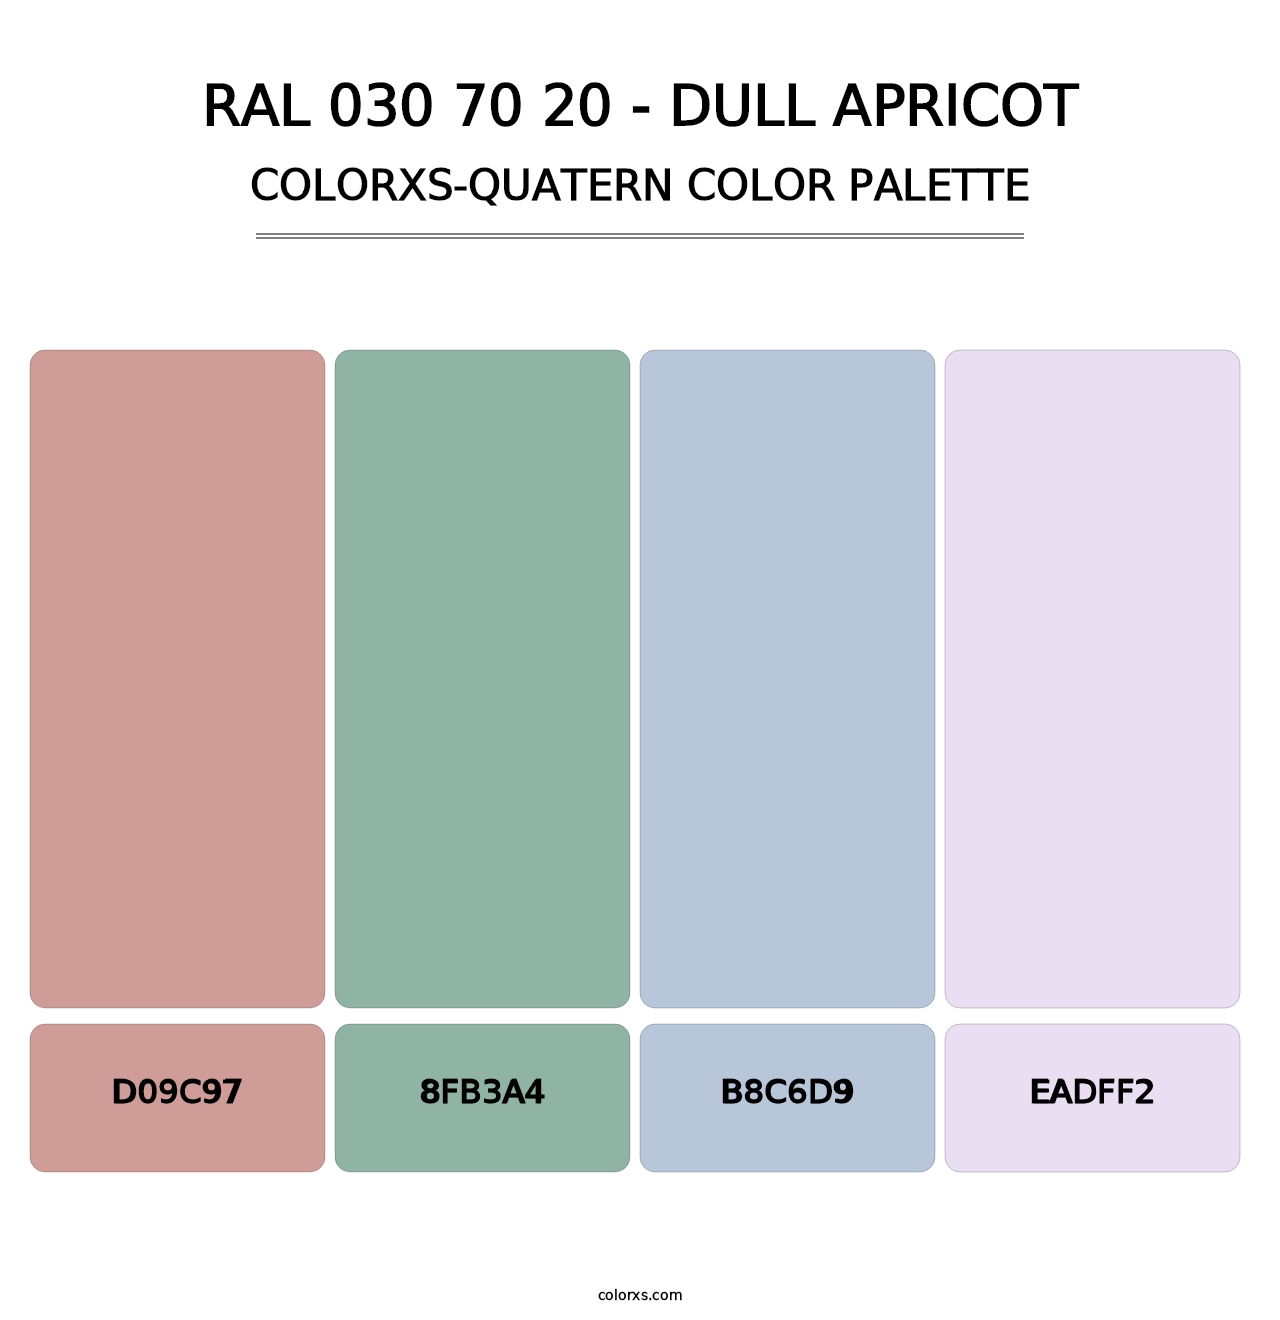 RAL 030 70 20 - Dull Apricot - Colorxs Quatern Palette